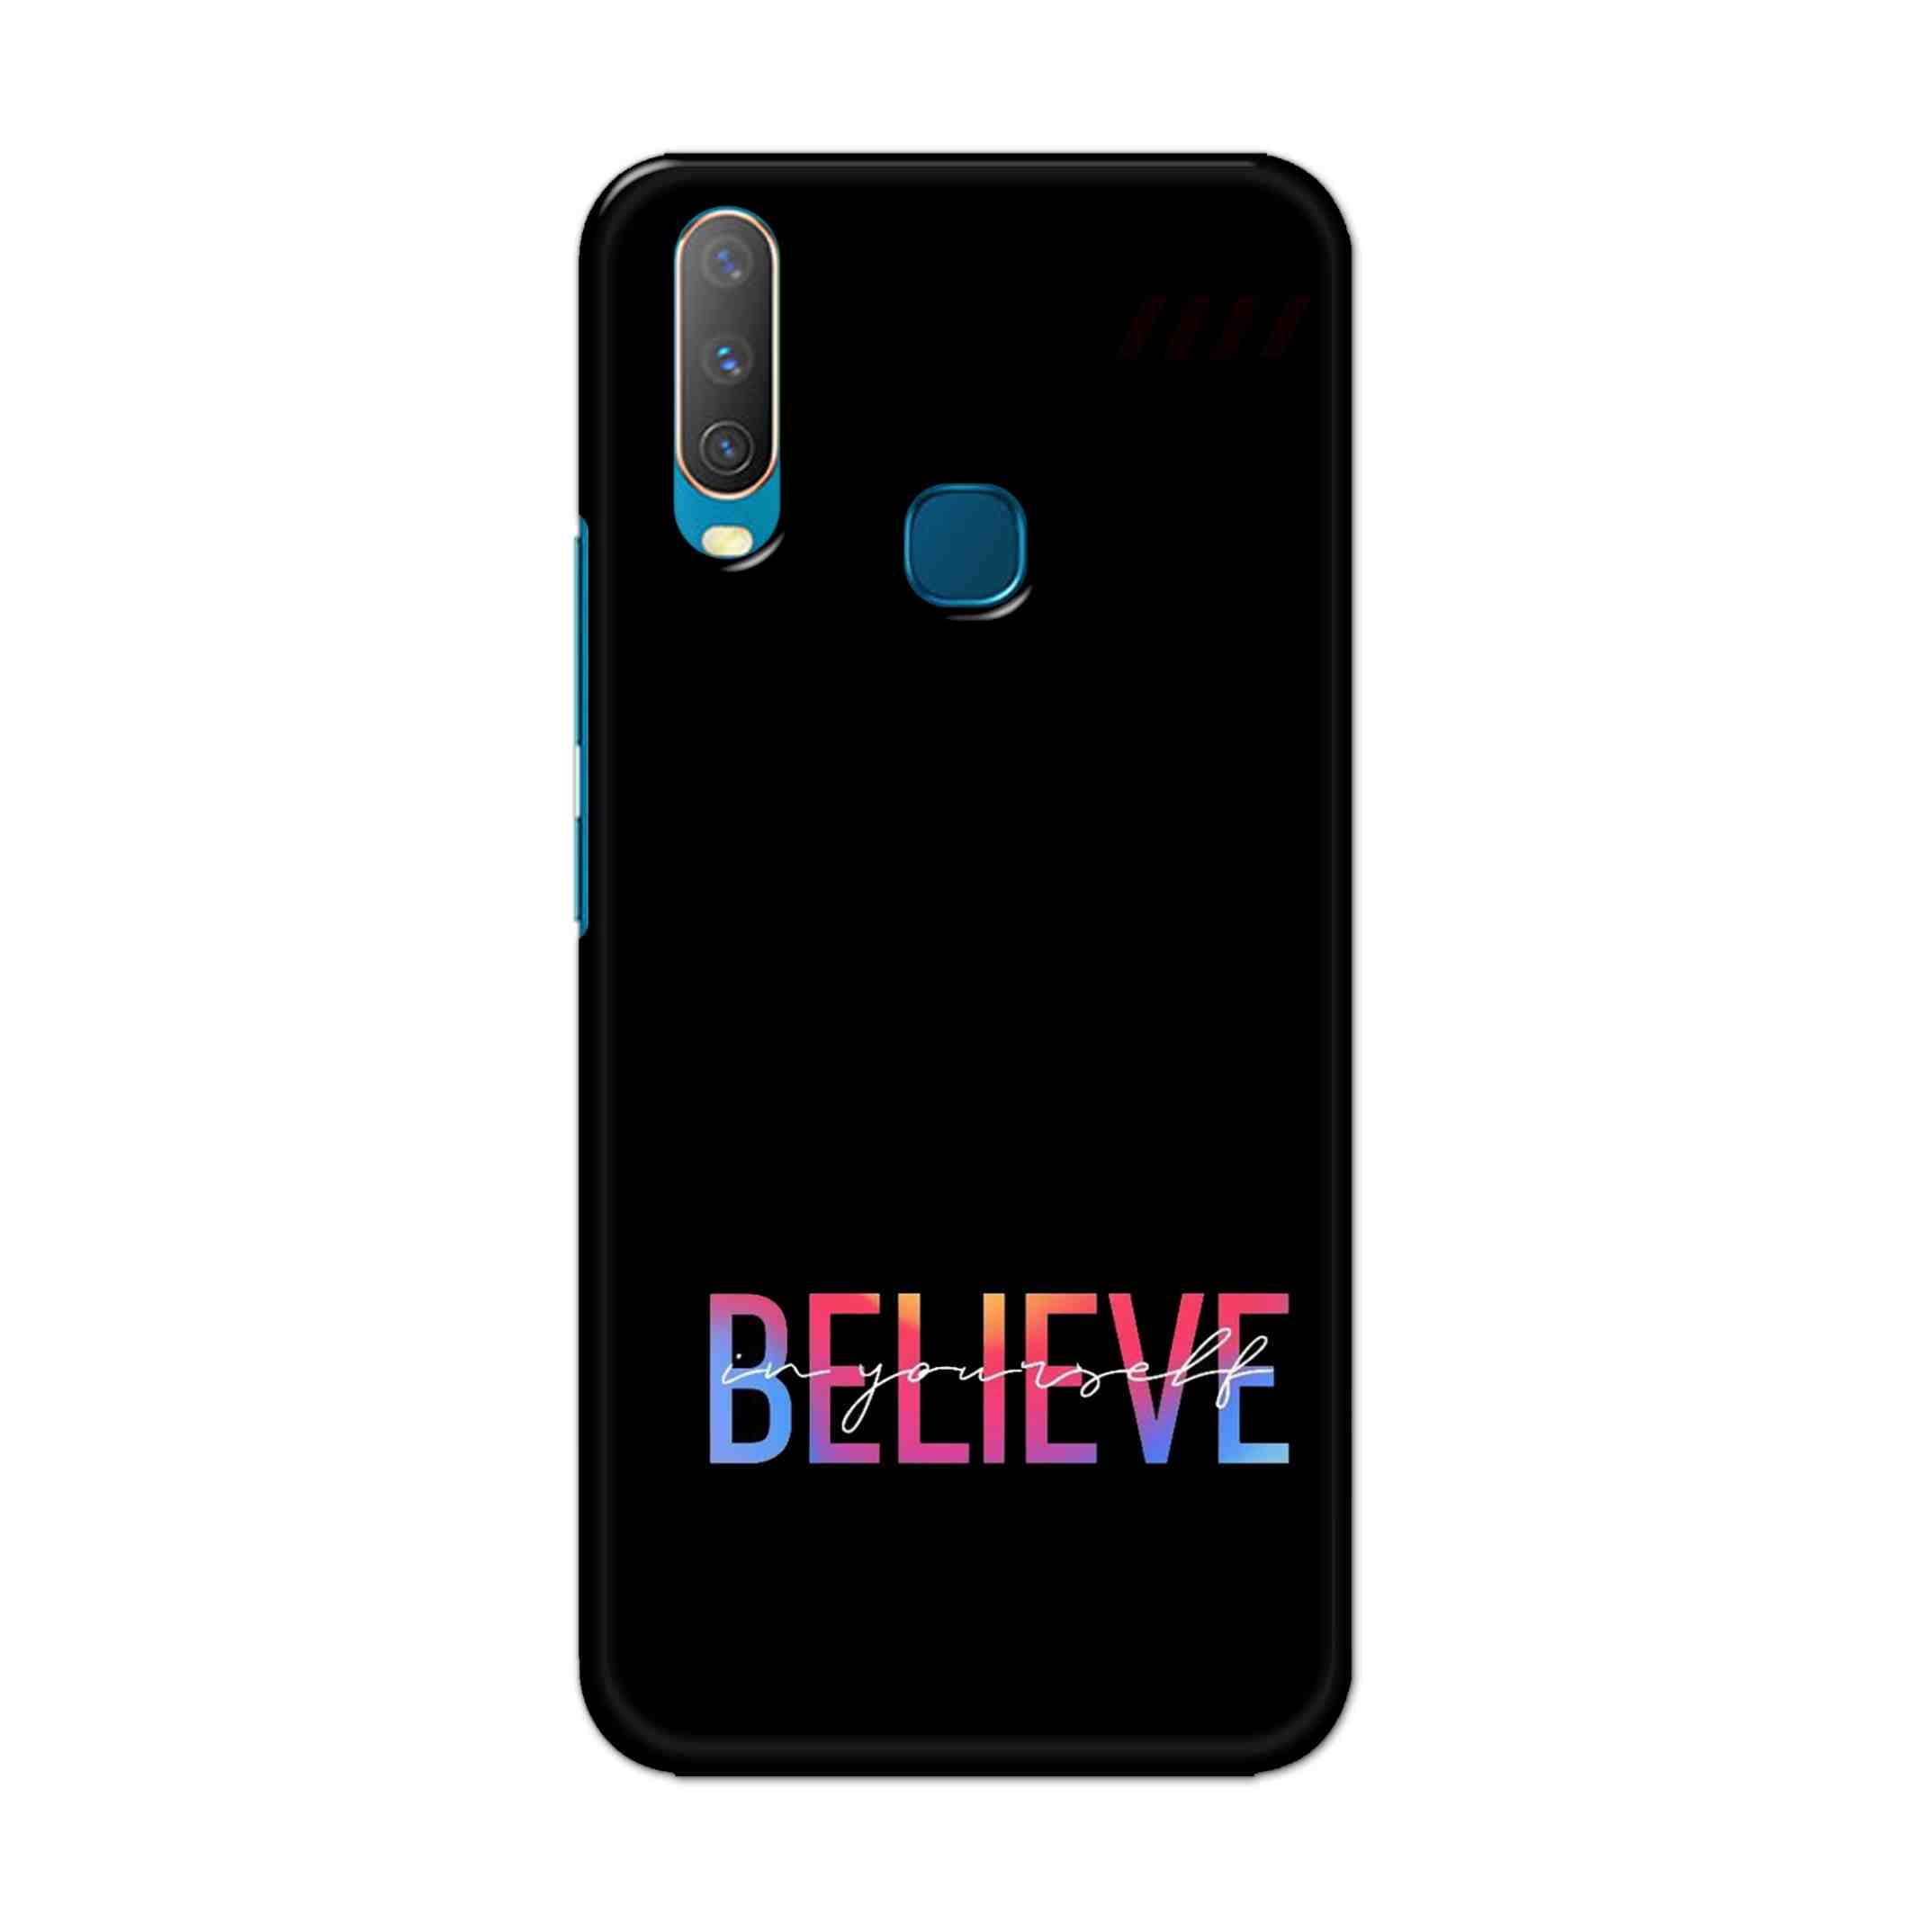 Buy Believe Hard Back Mobile Phone Case Cover For Vivo Y17 / U10 Online